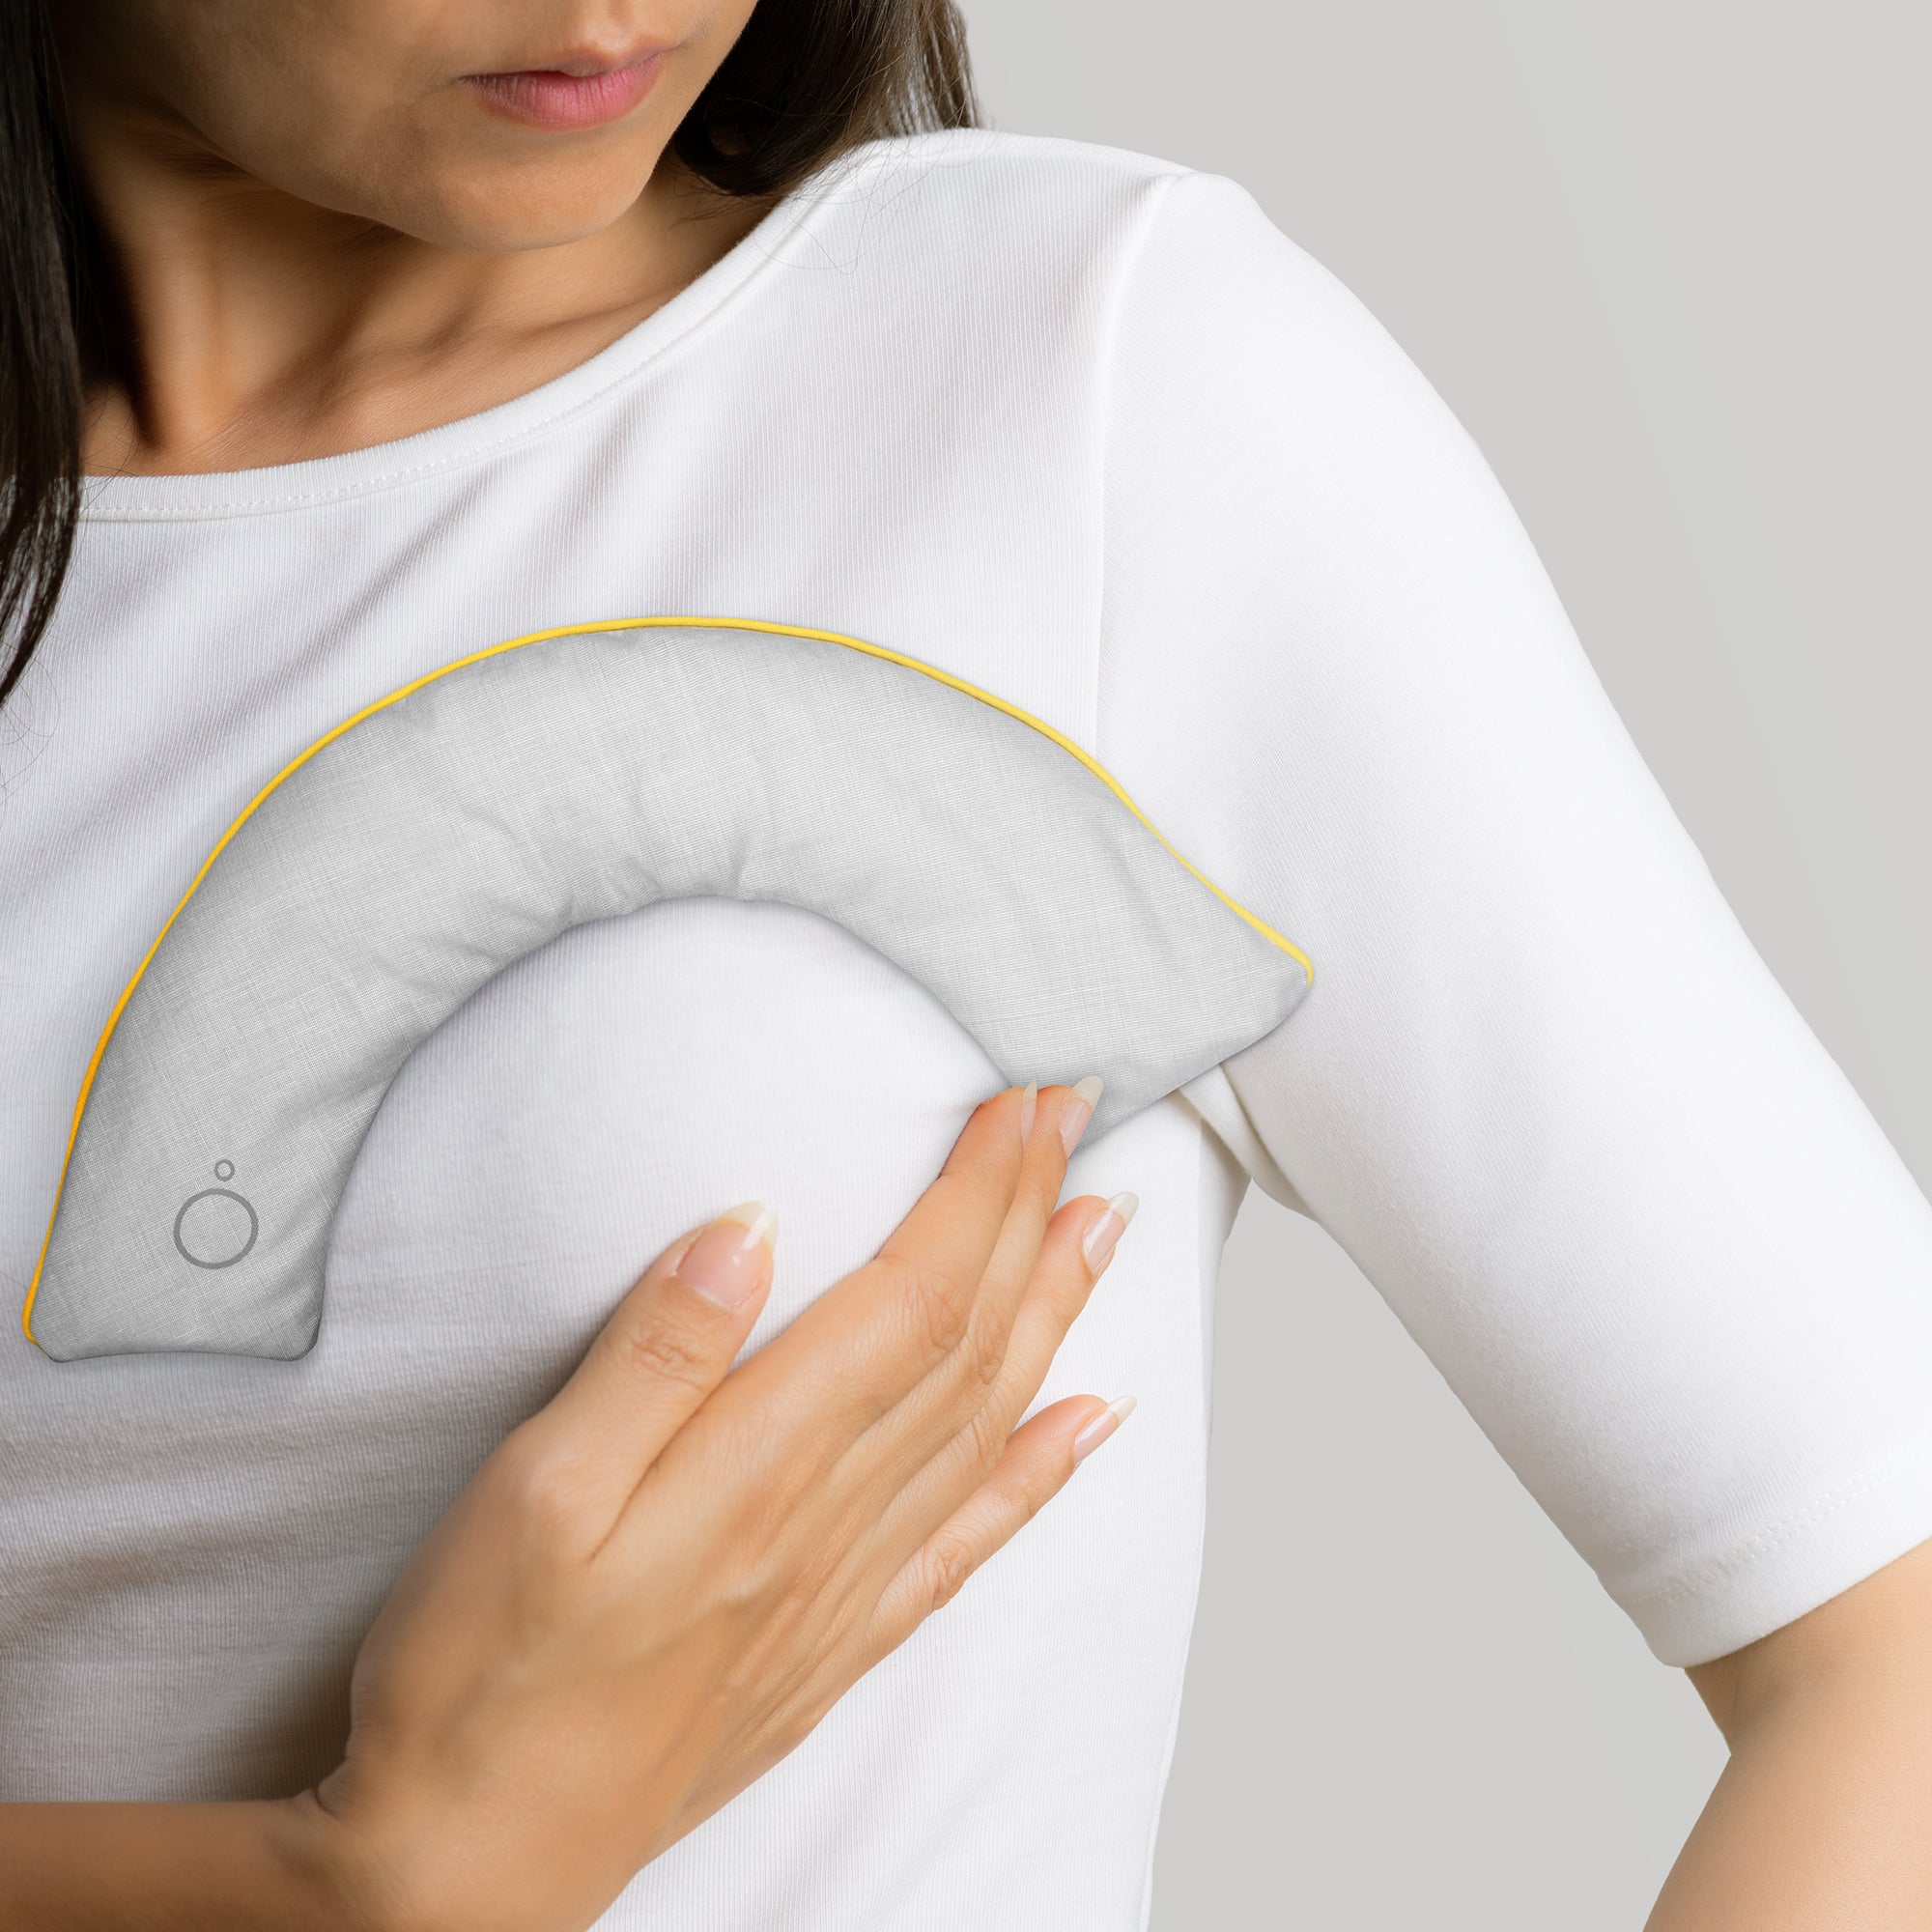 Nursing Breast Compress - For Lactating Mothers